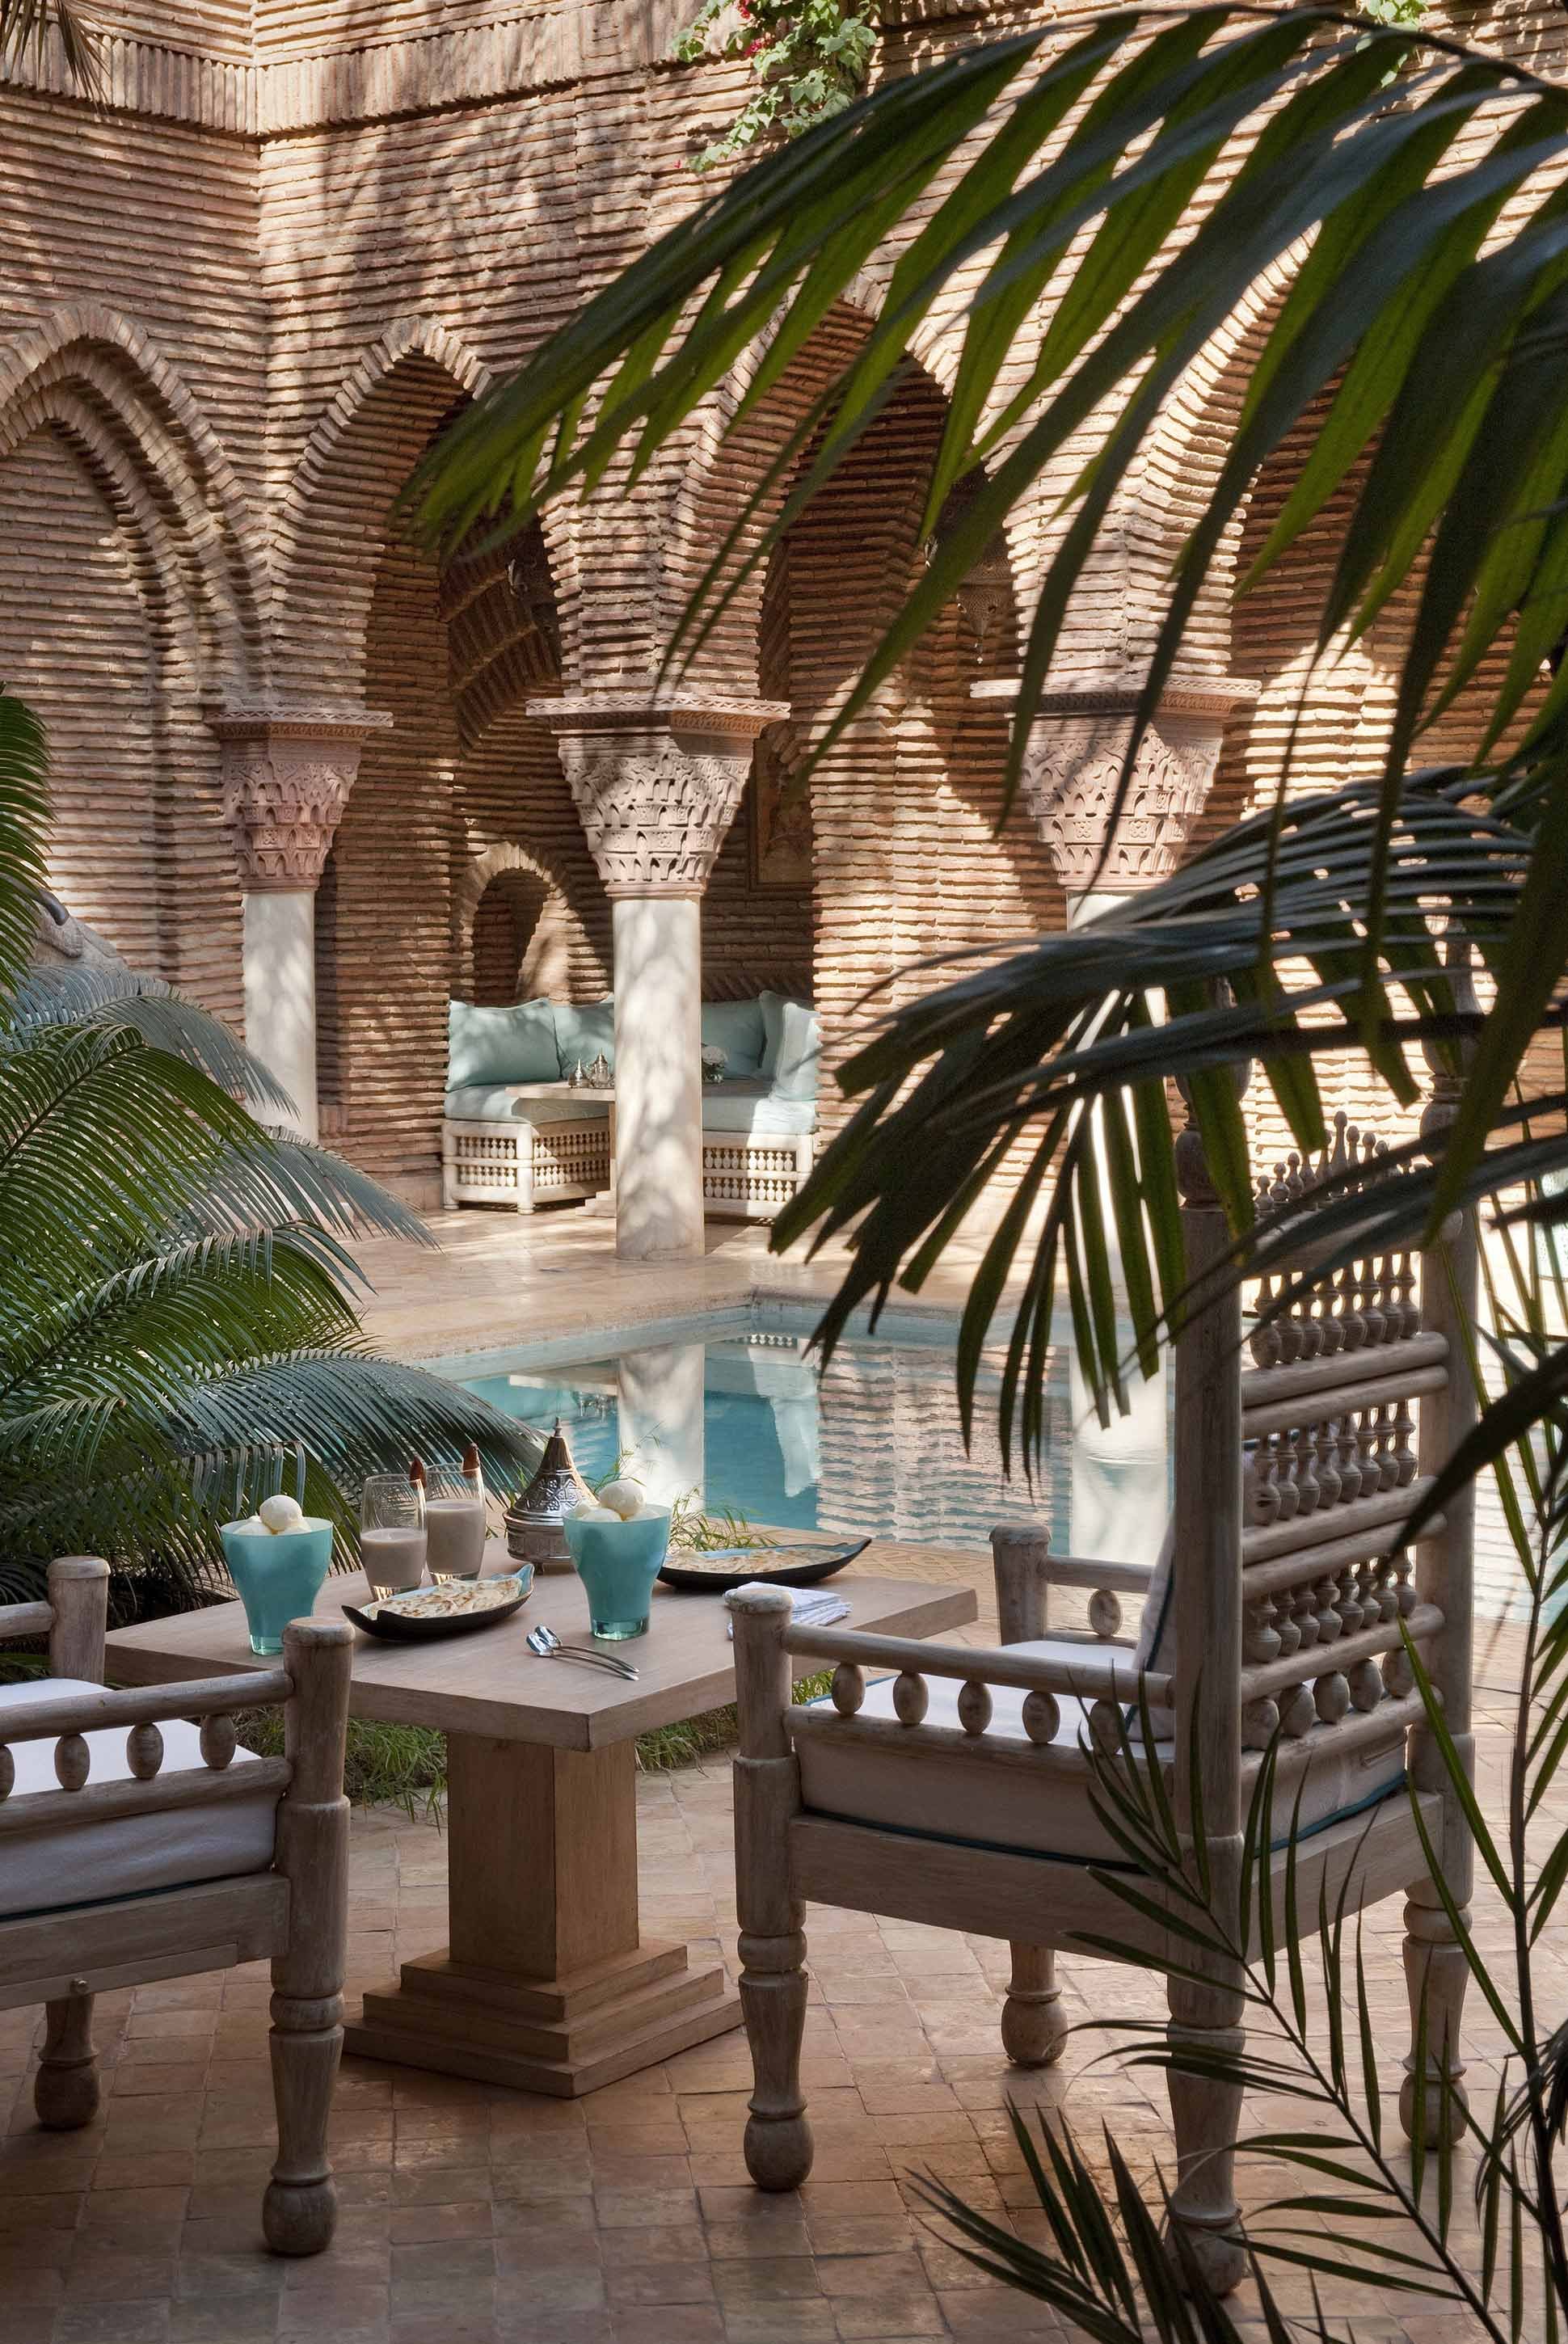 Luxury Hotel La Sultana Marrakesh 5* Africa Marocco Marrakesh swimming pool relaxation